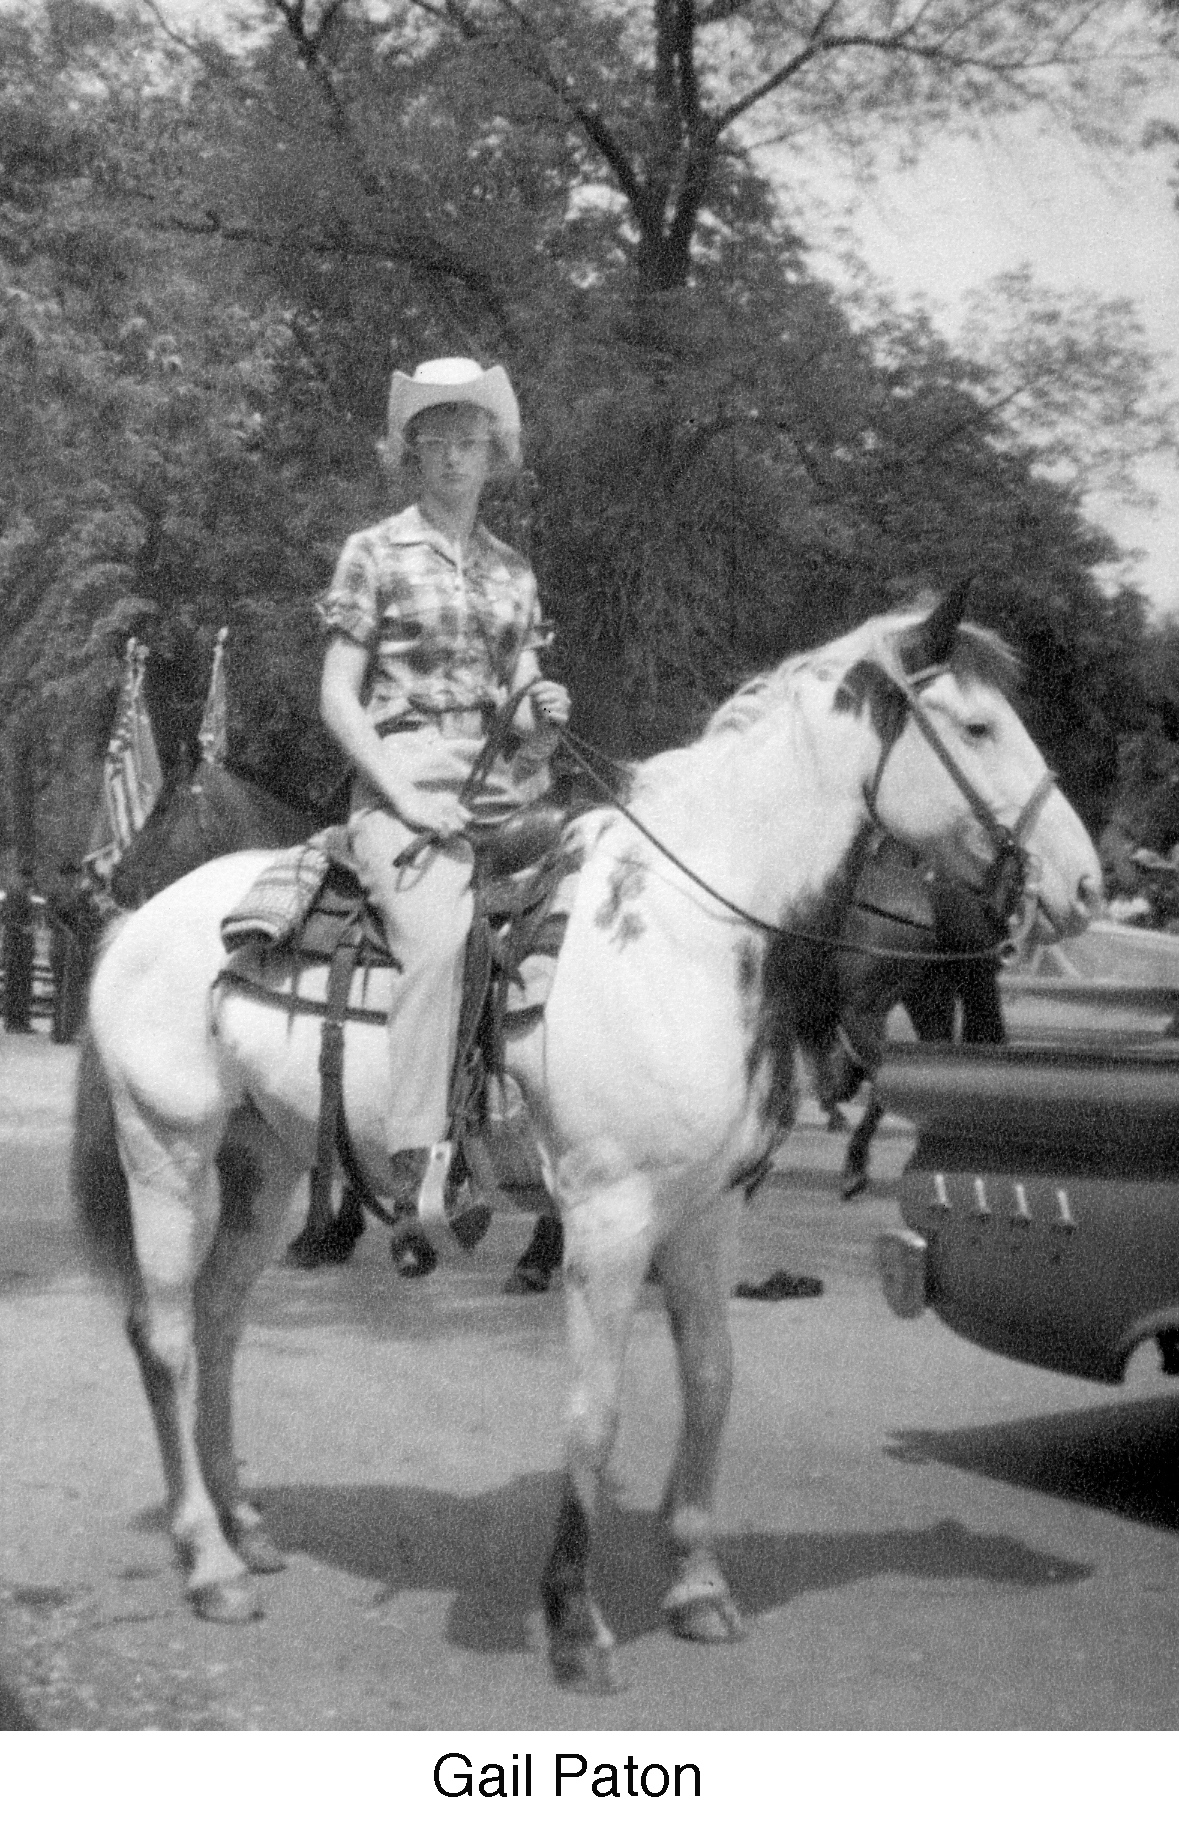 Gail riding a horse in a parade